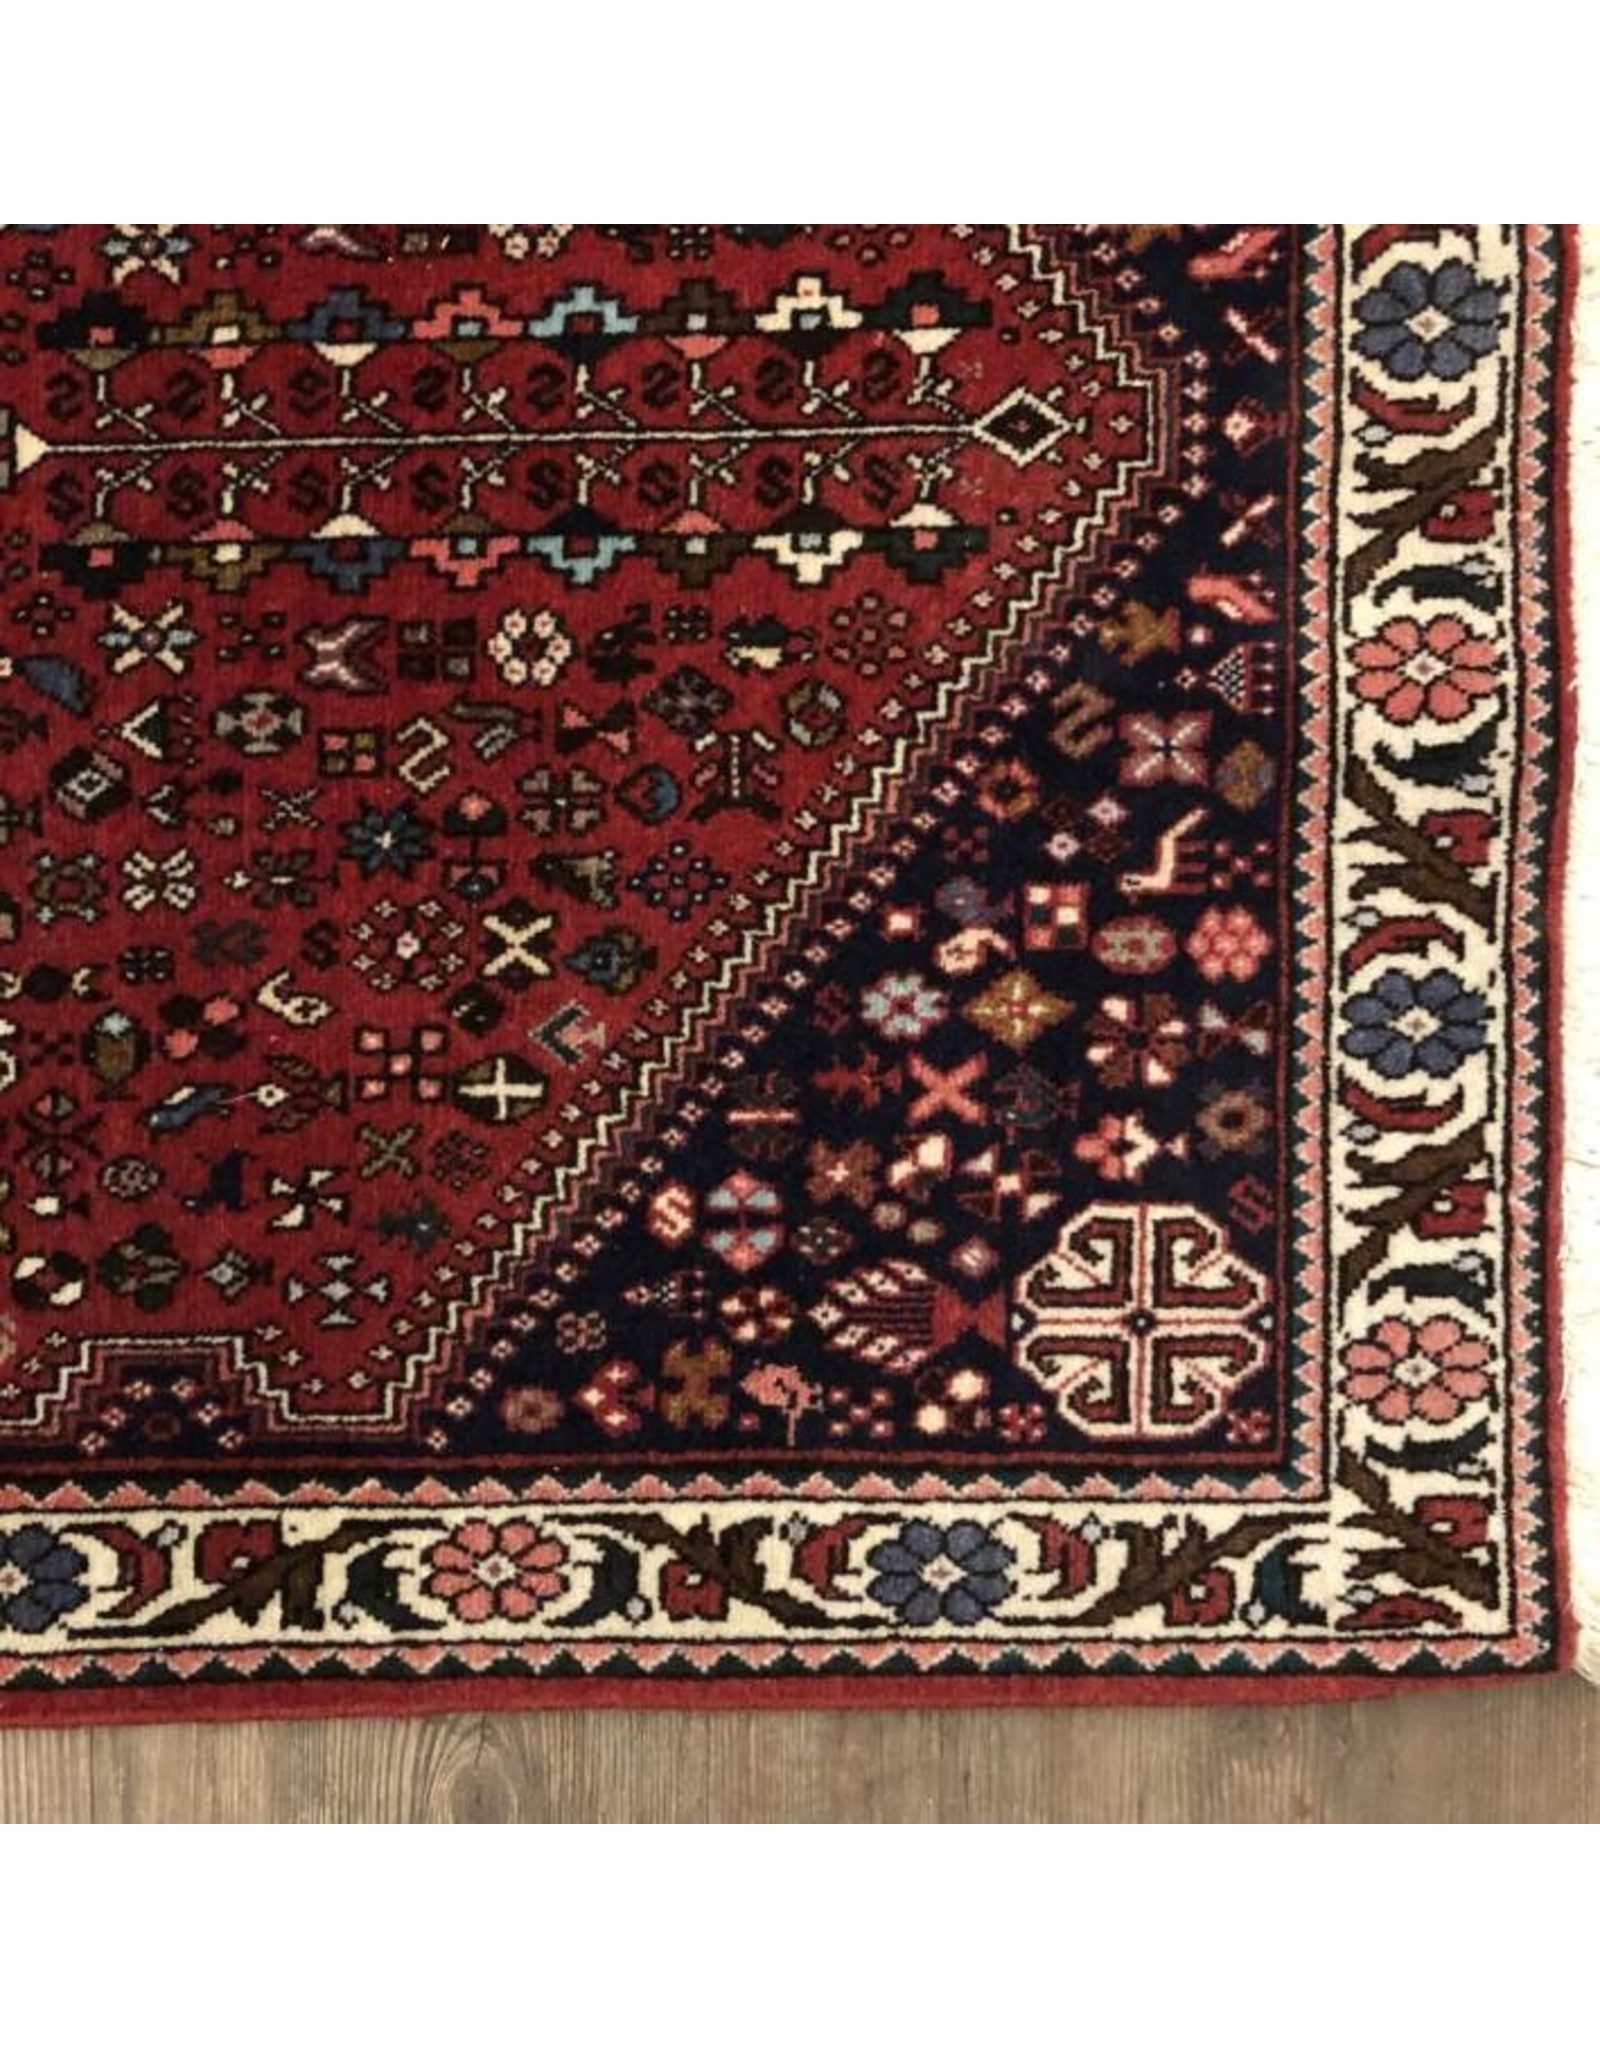 Carpet - red floral Persian, 3'5" x 5'4"